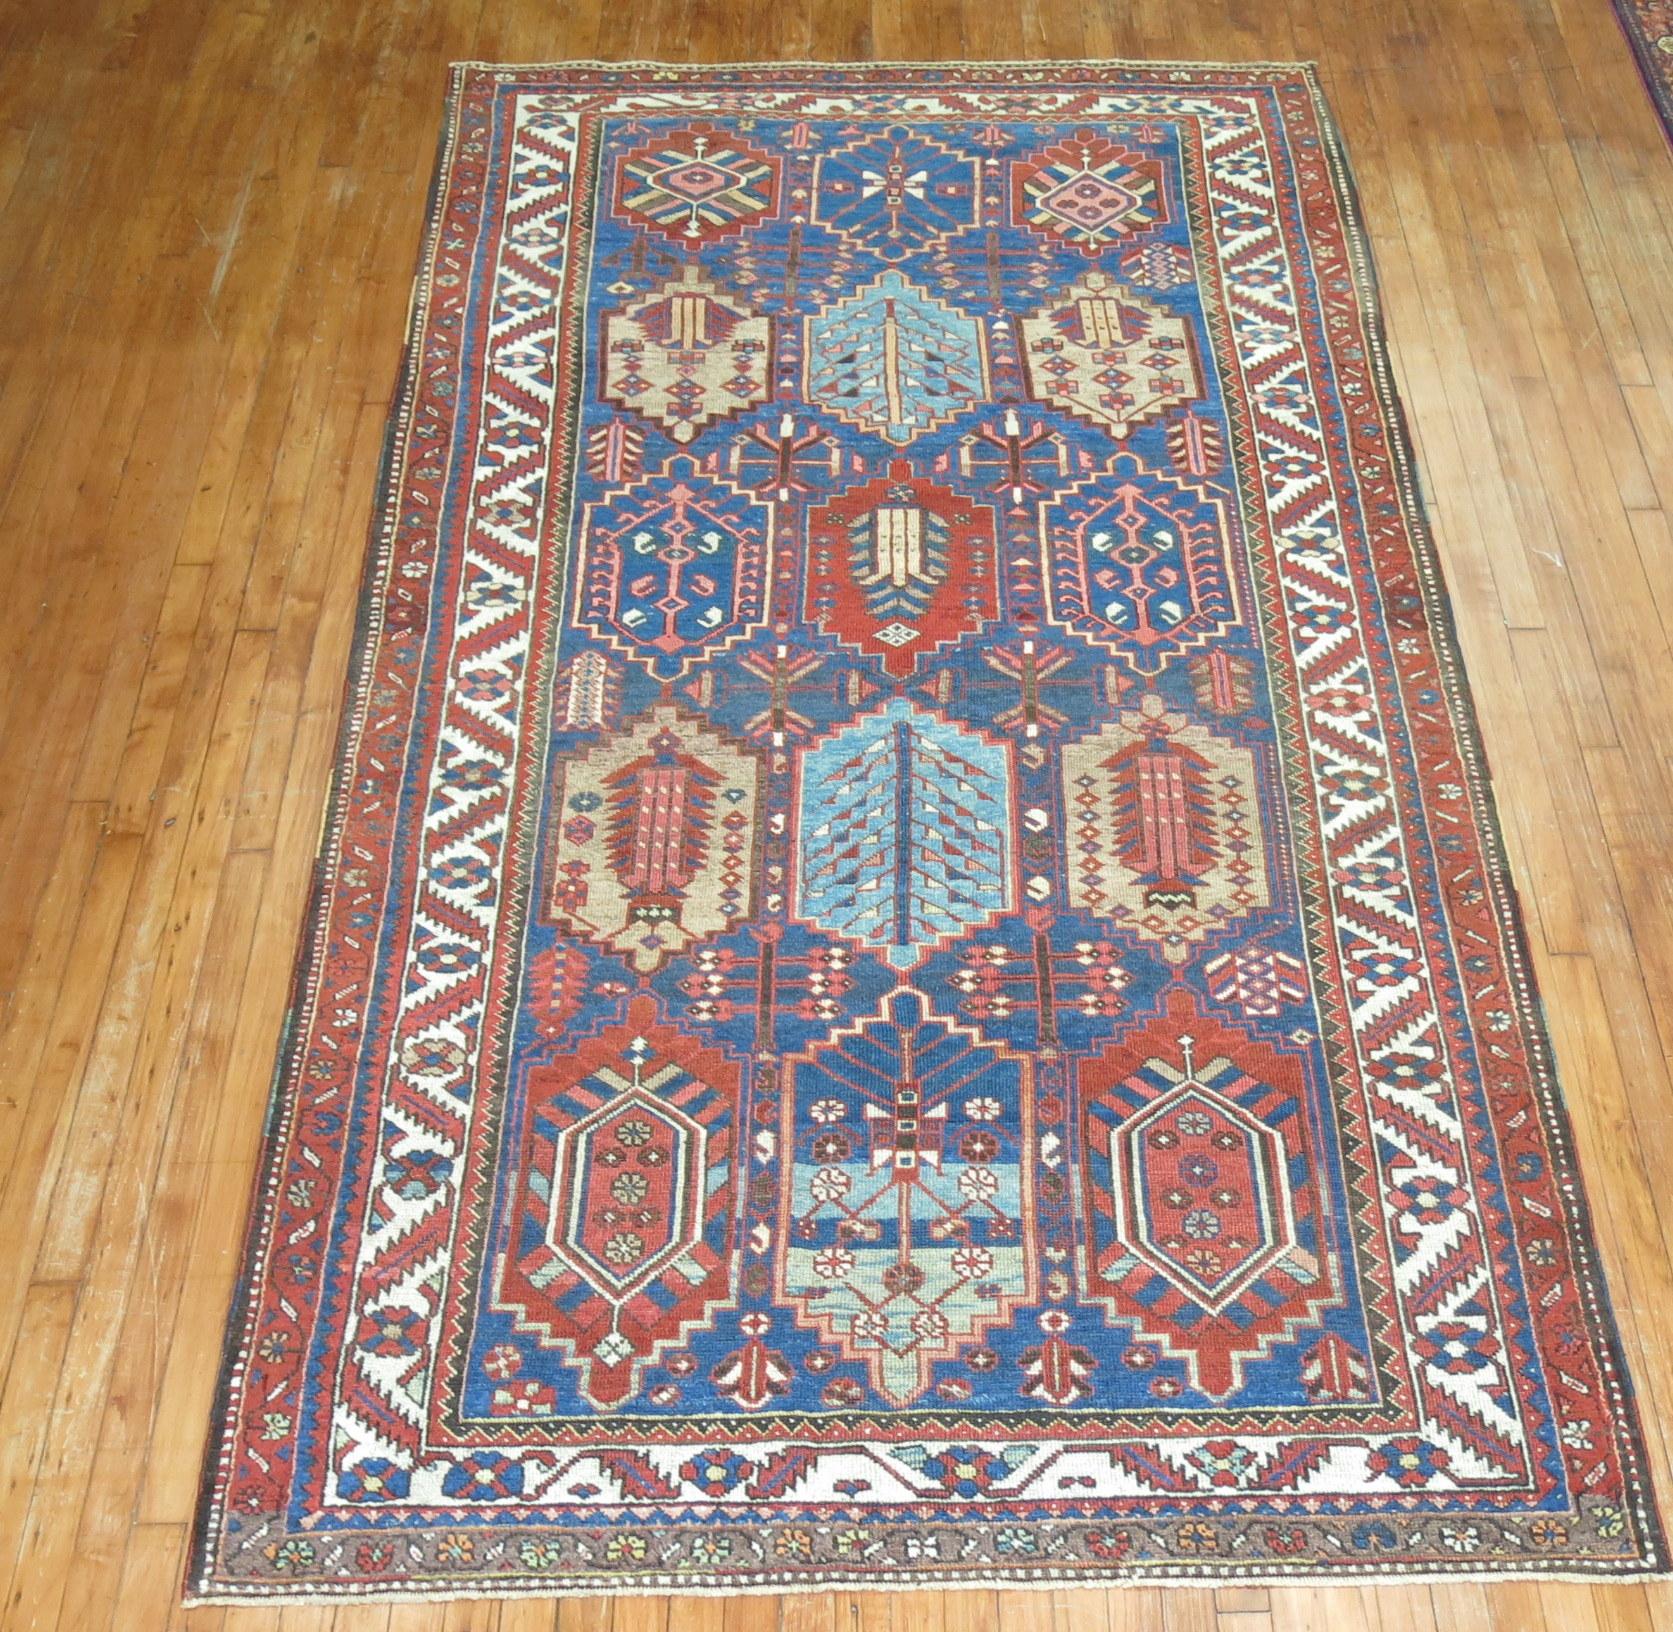 Early 20th-century Tribal Persian Bakhtiari rug in rare gallery format.

Measures: 5'4